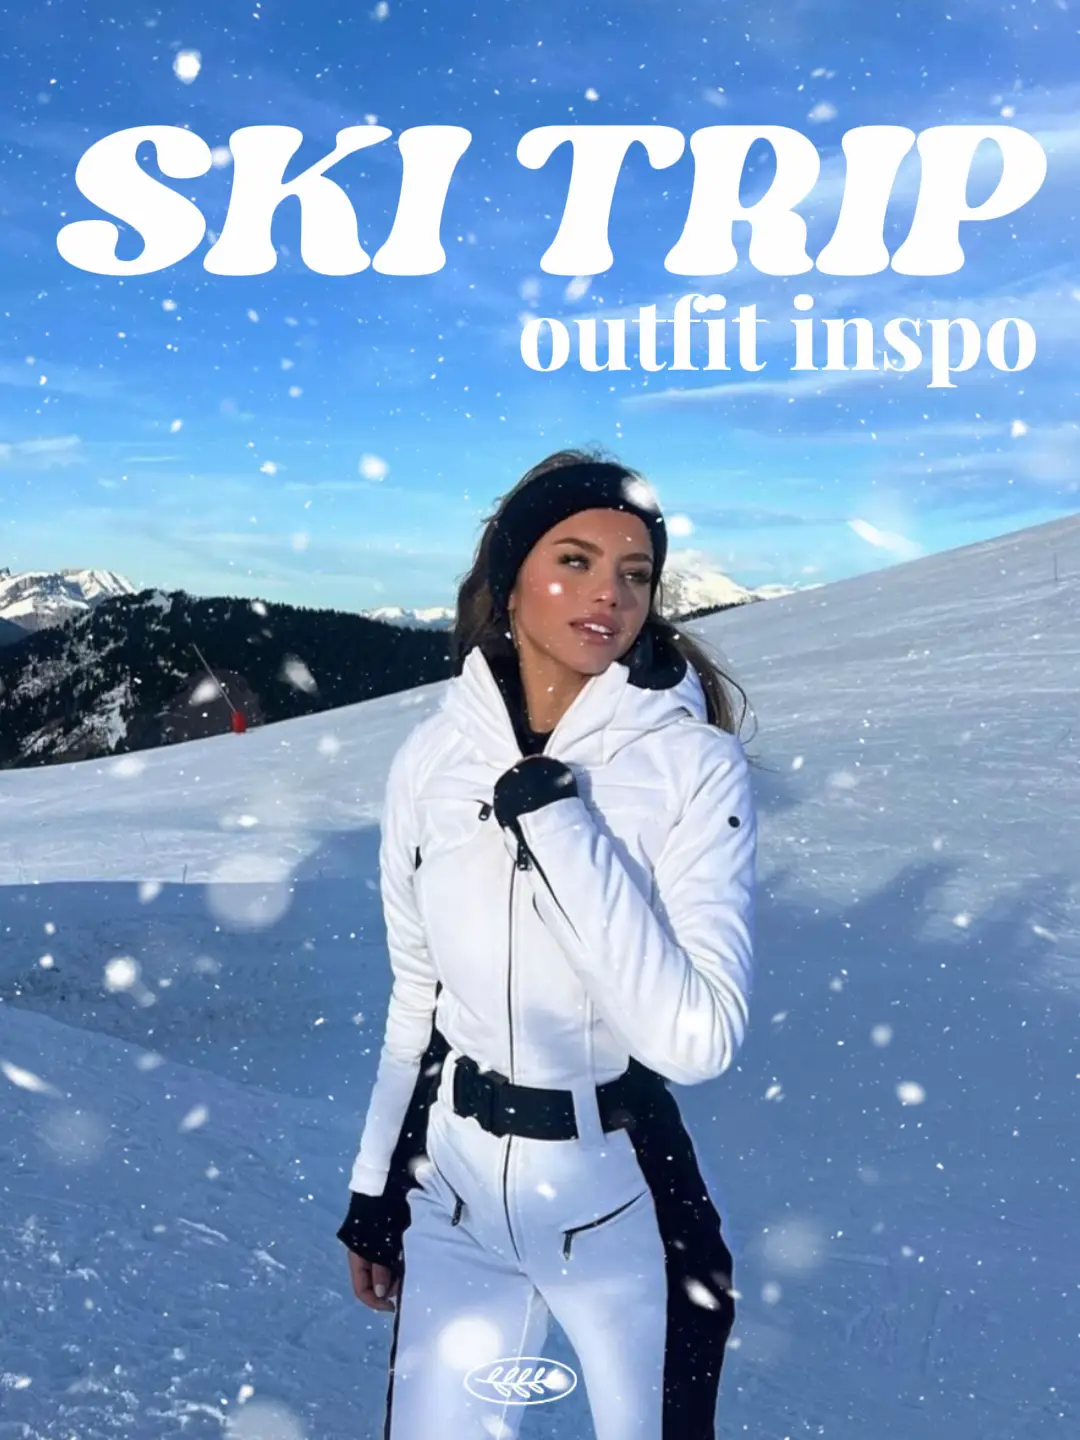 In the Slopes Gettin Tipsy, Girls Ski Trip Matching Shirts, Cute Ski  Shirts, Ski Graphic Tees, Womens Ski Outfit, Ski Weekend, Ski Gifts -   Canada